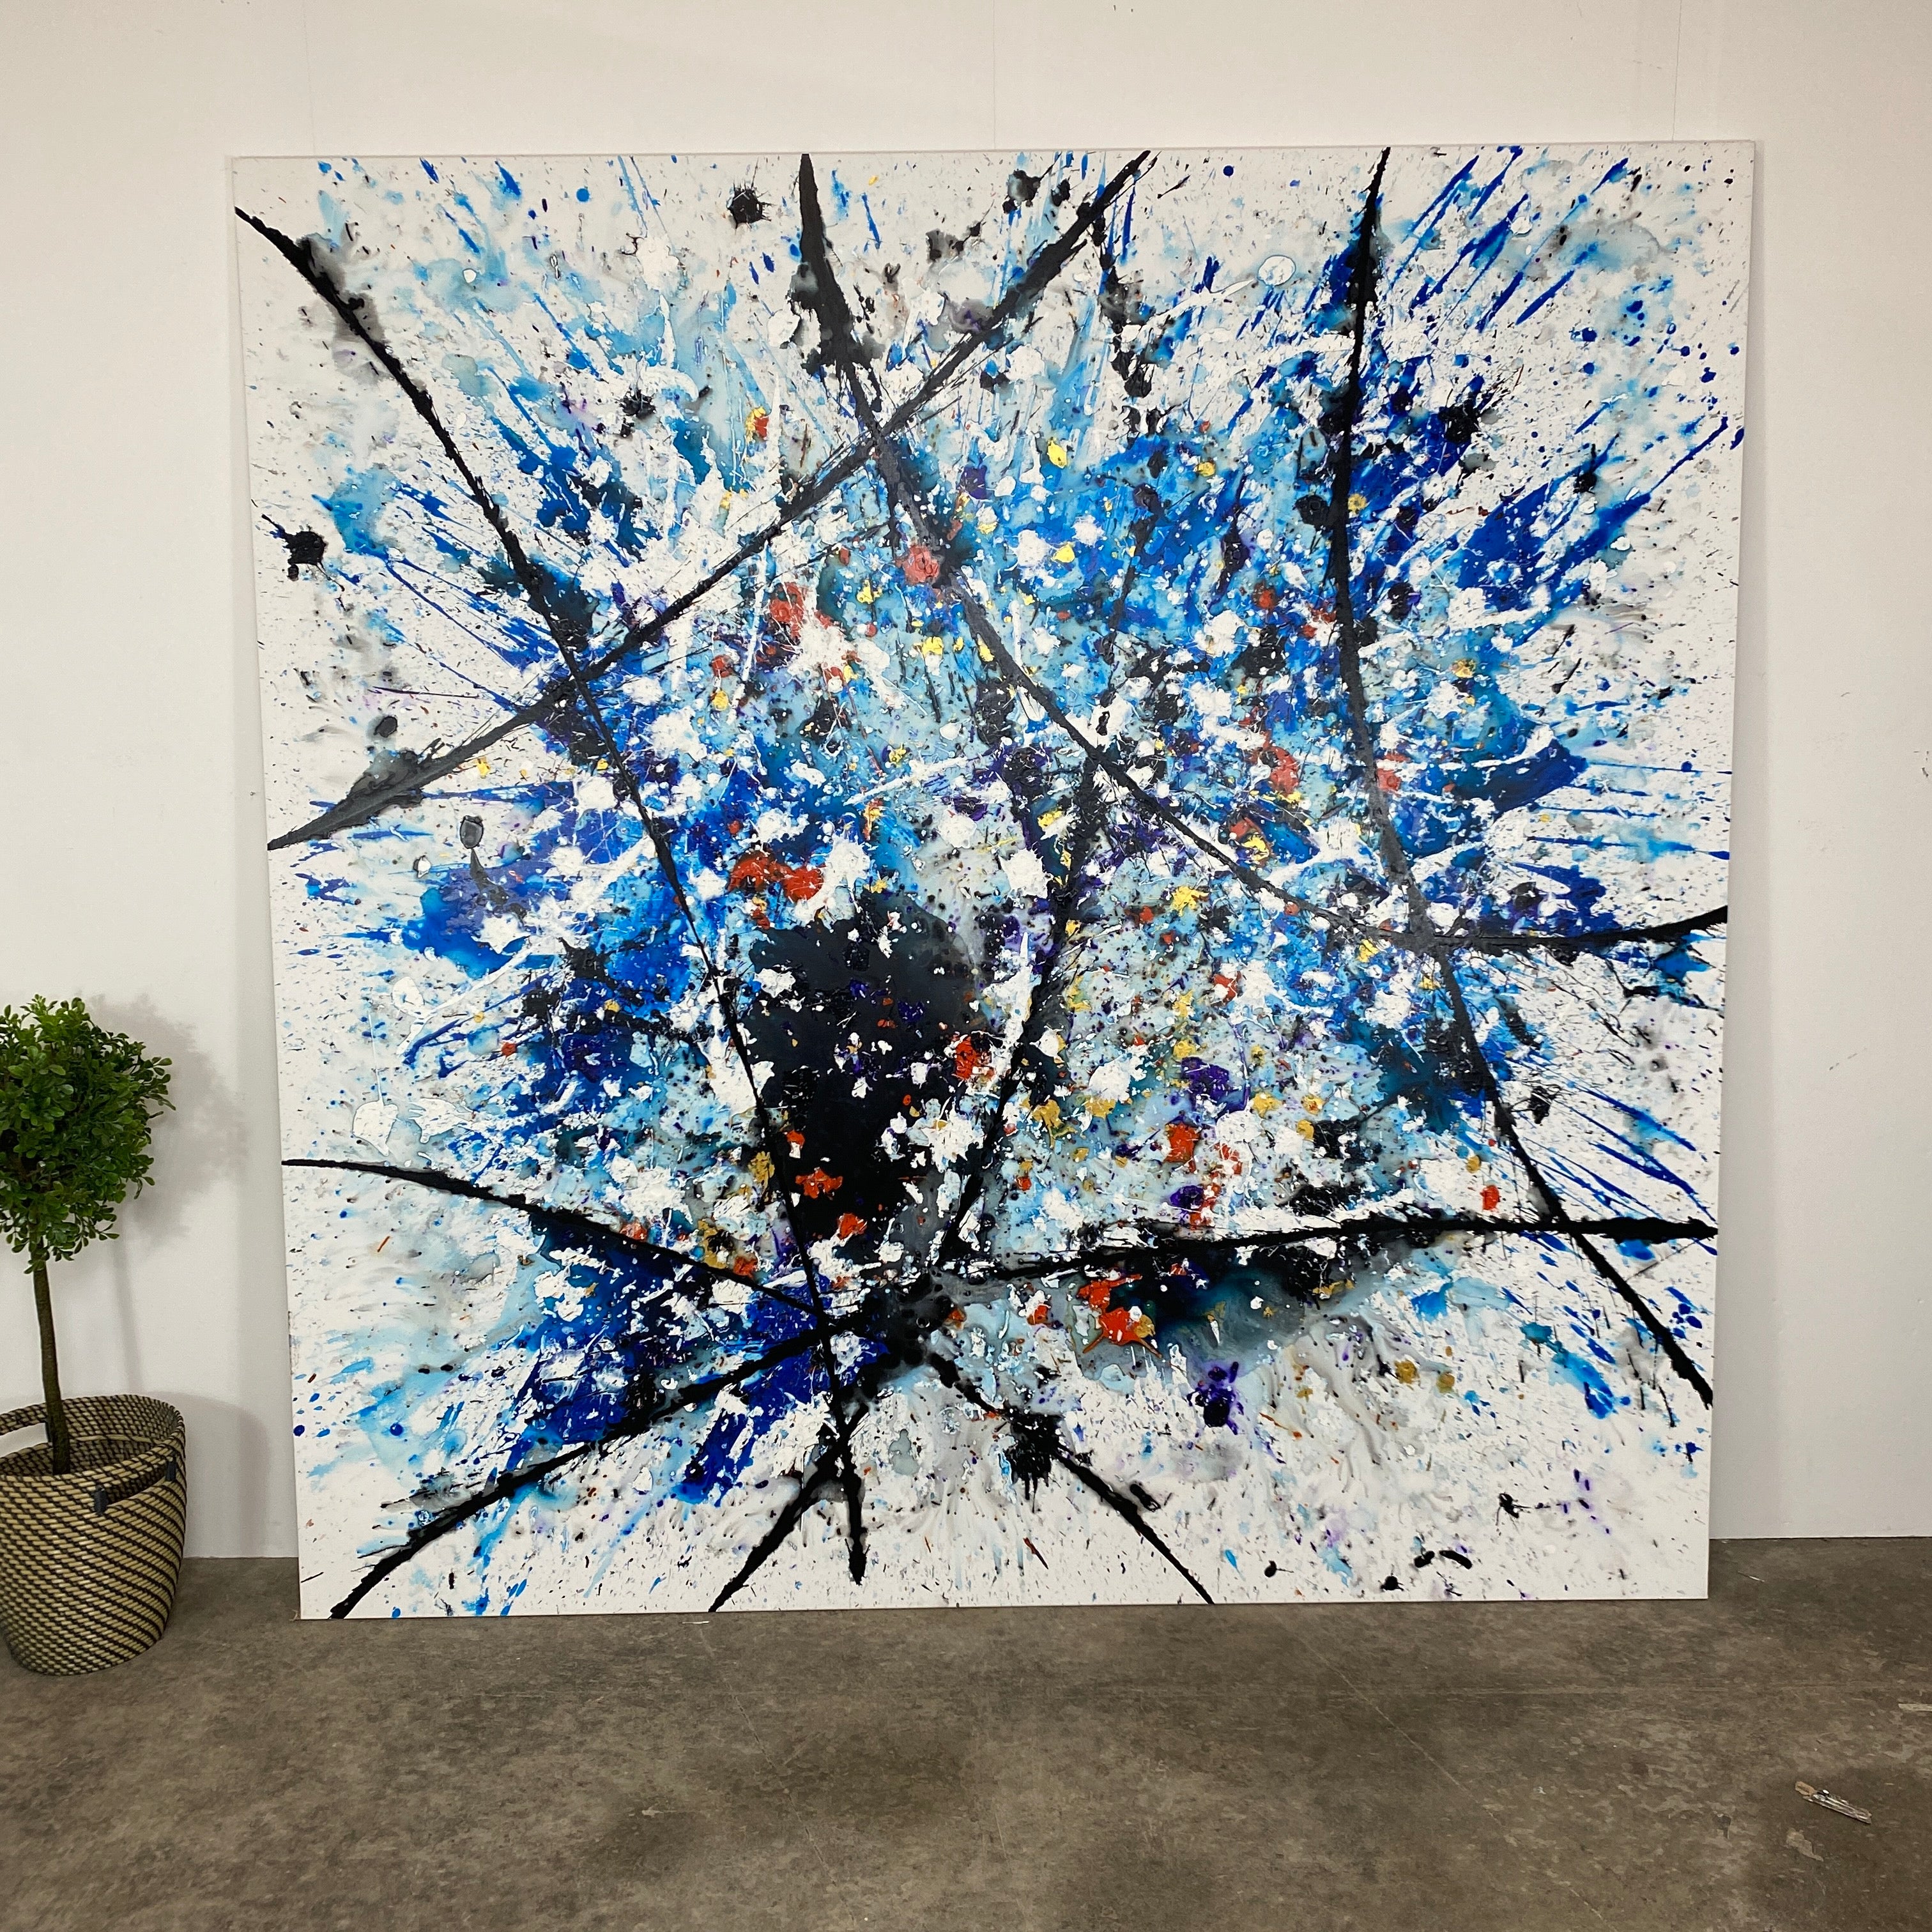 Painting: "Splash #22" 200 x 200 cm